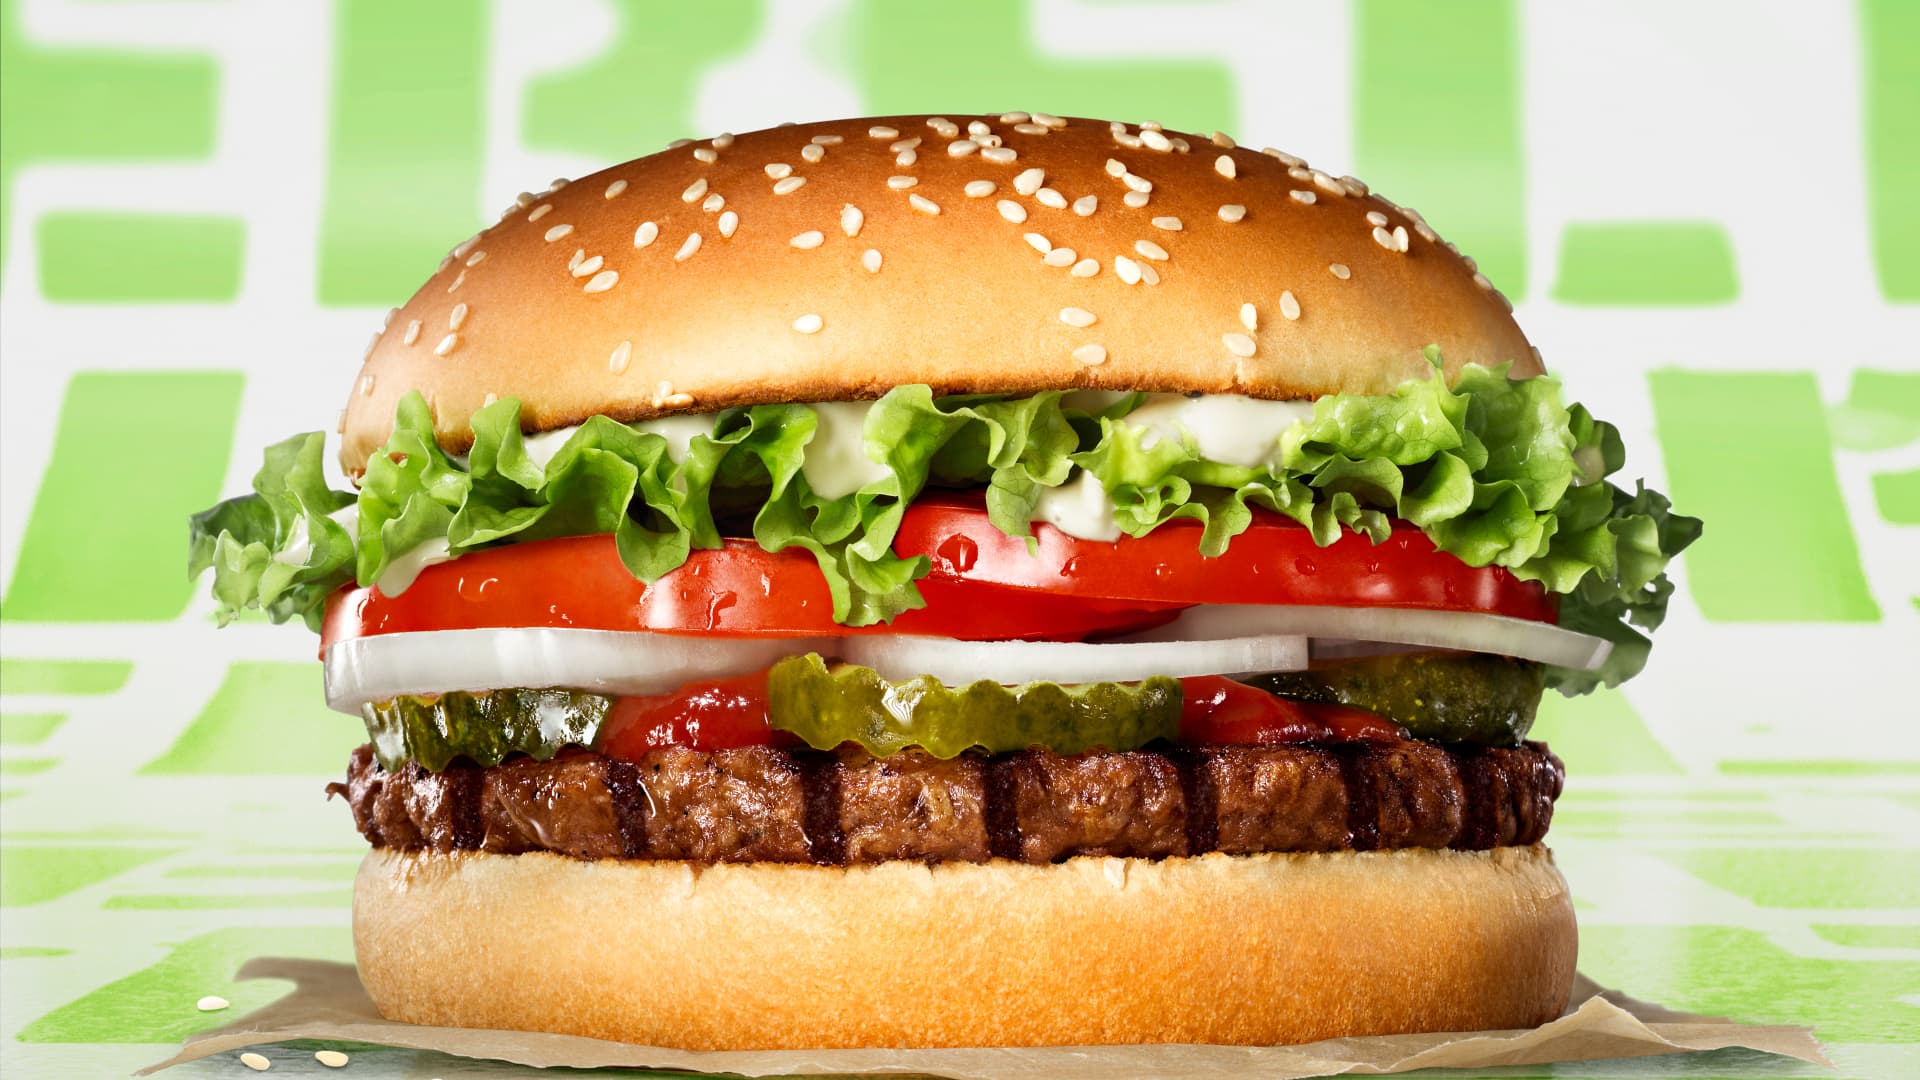 Burger King's plant-based Rebel Whopper isn't suitable for vegetarians